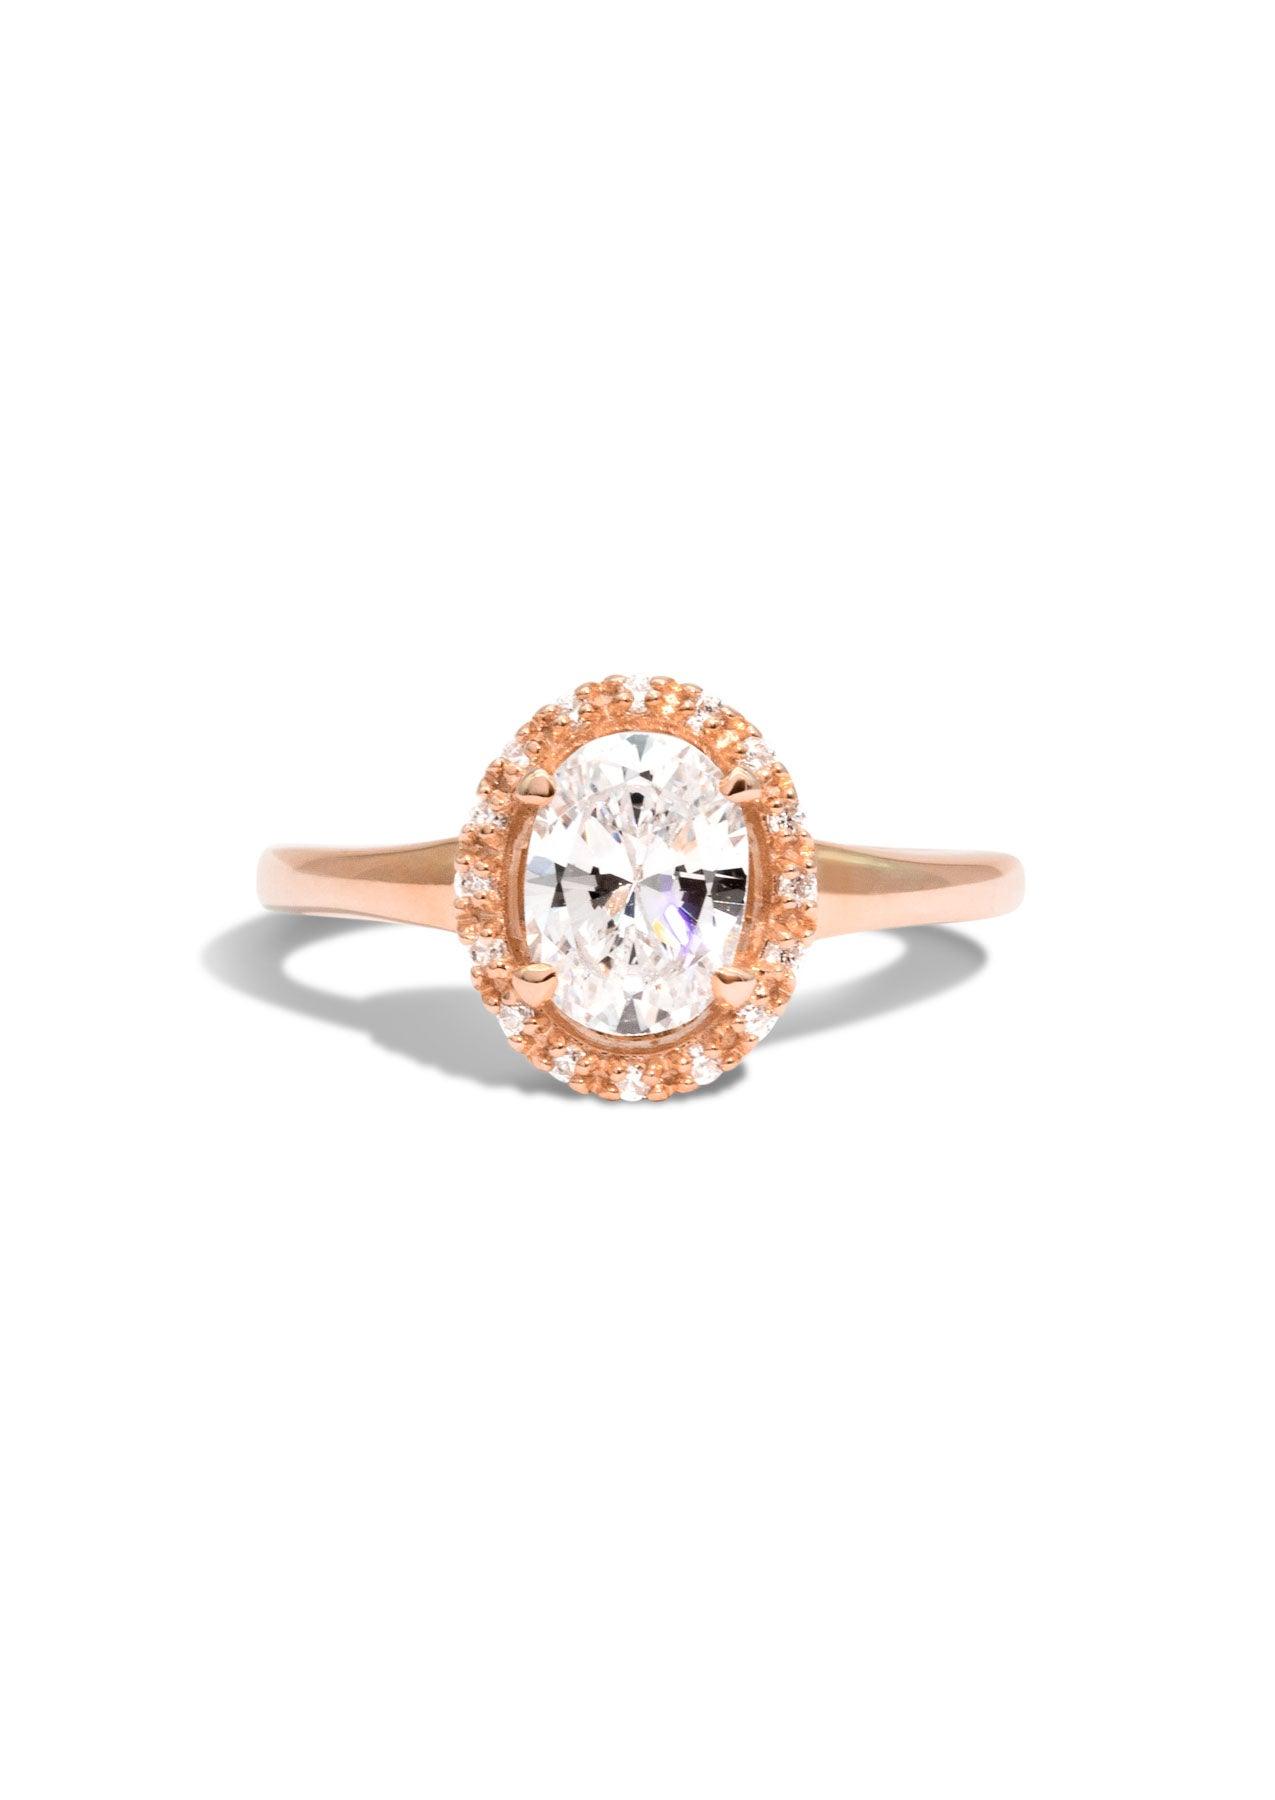 The Iris Rose Gold Cultured Diamond Ring